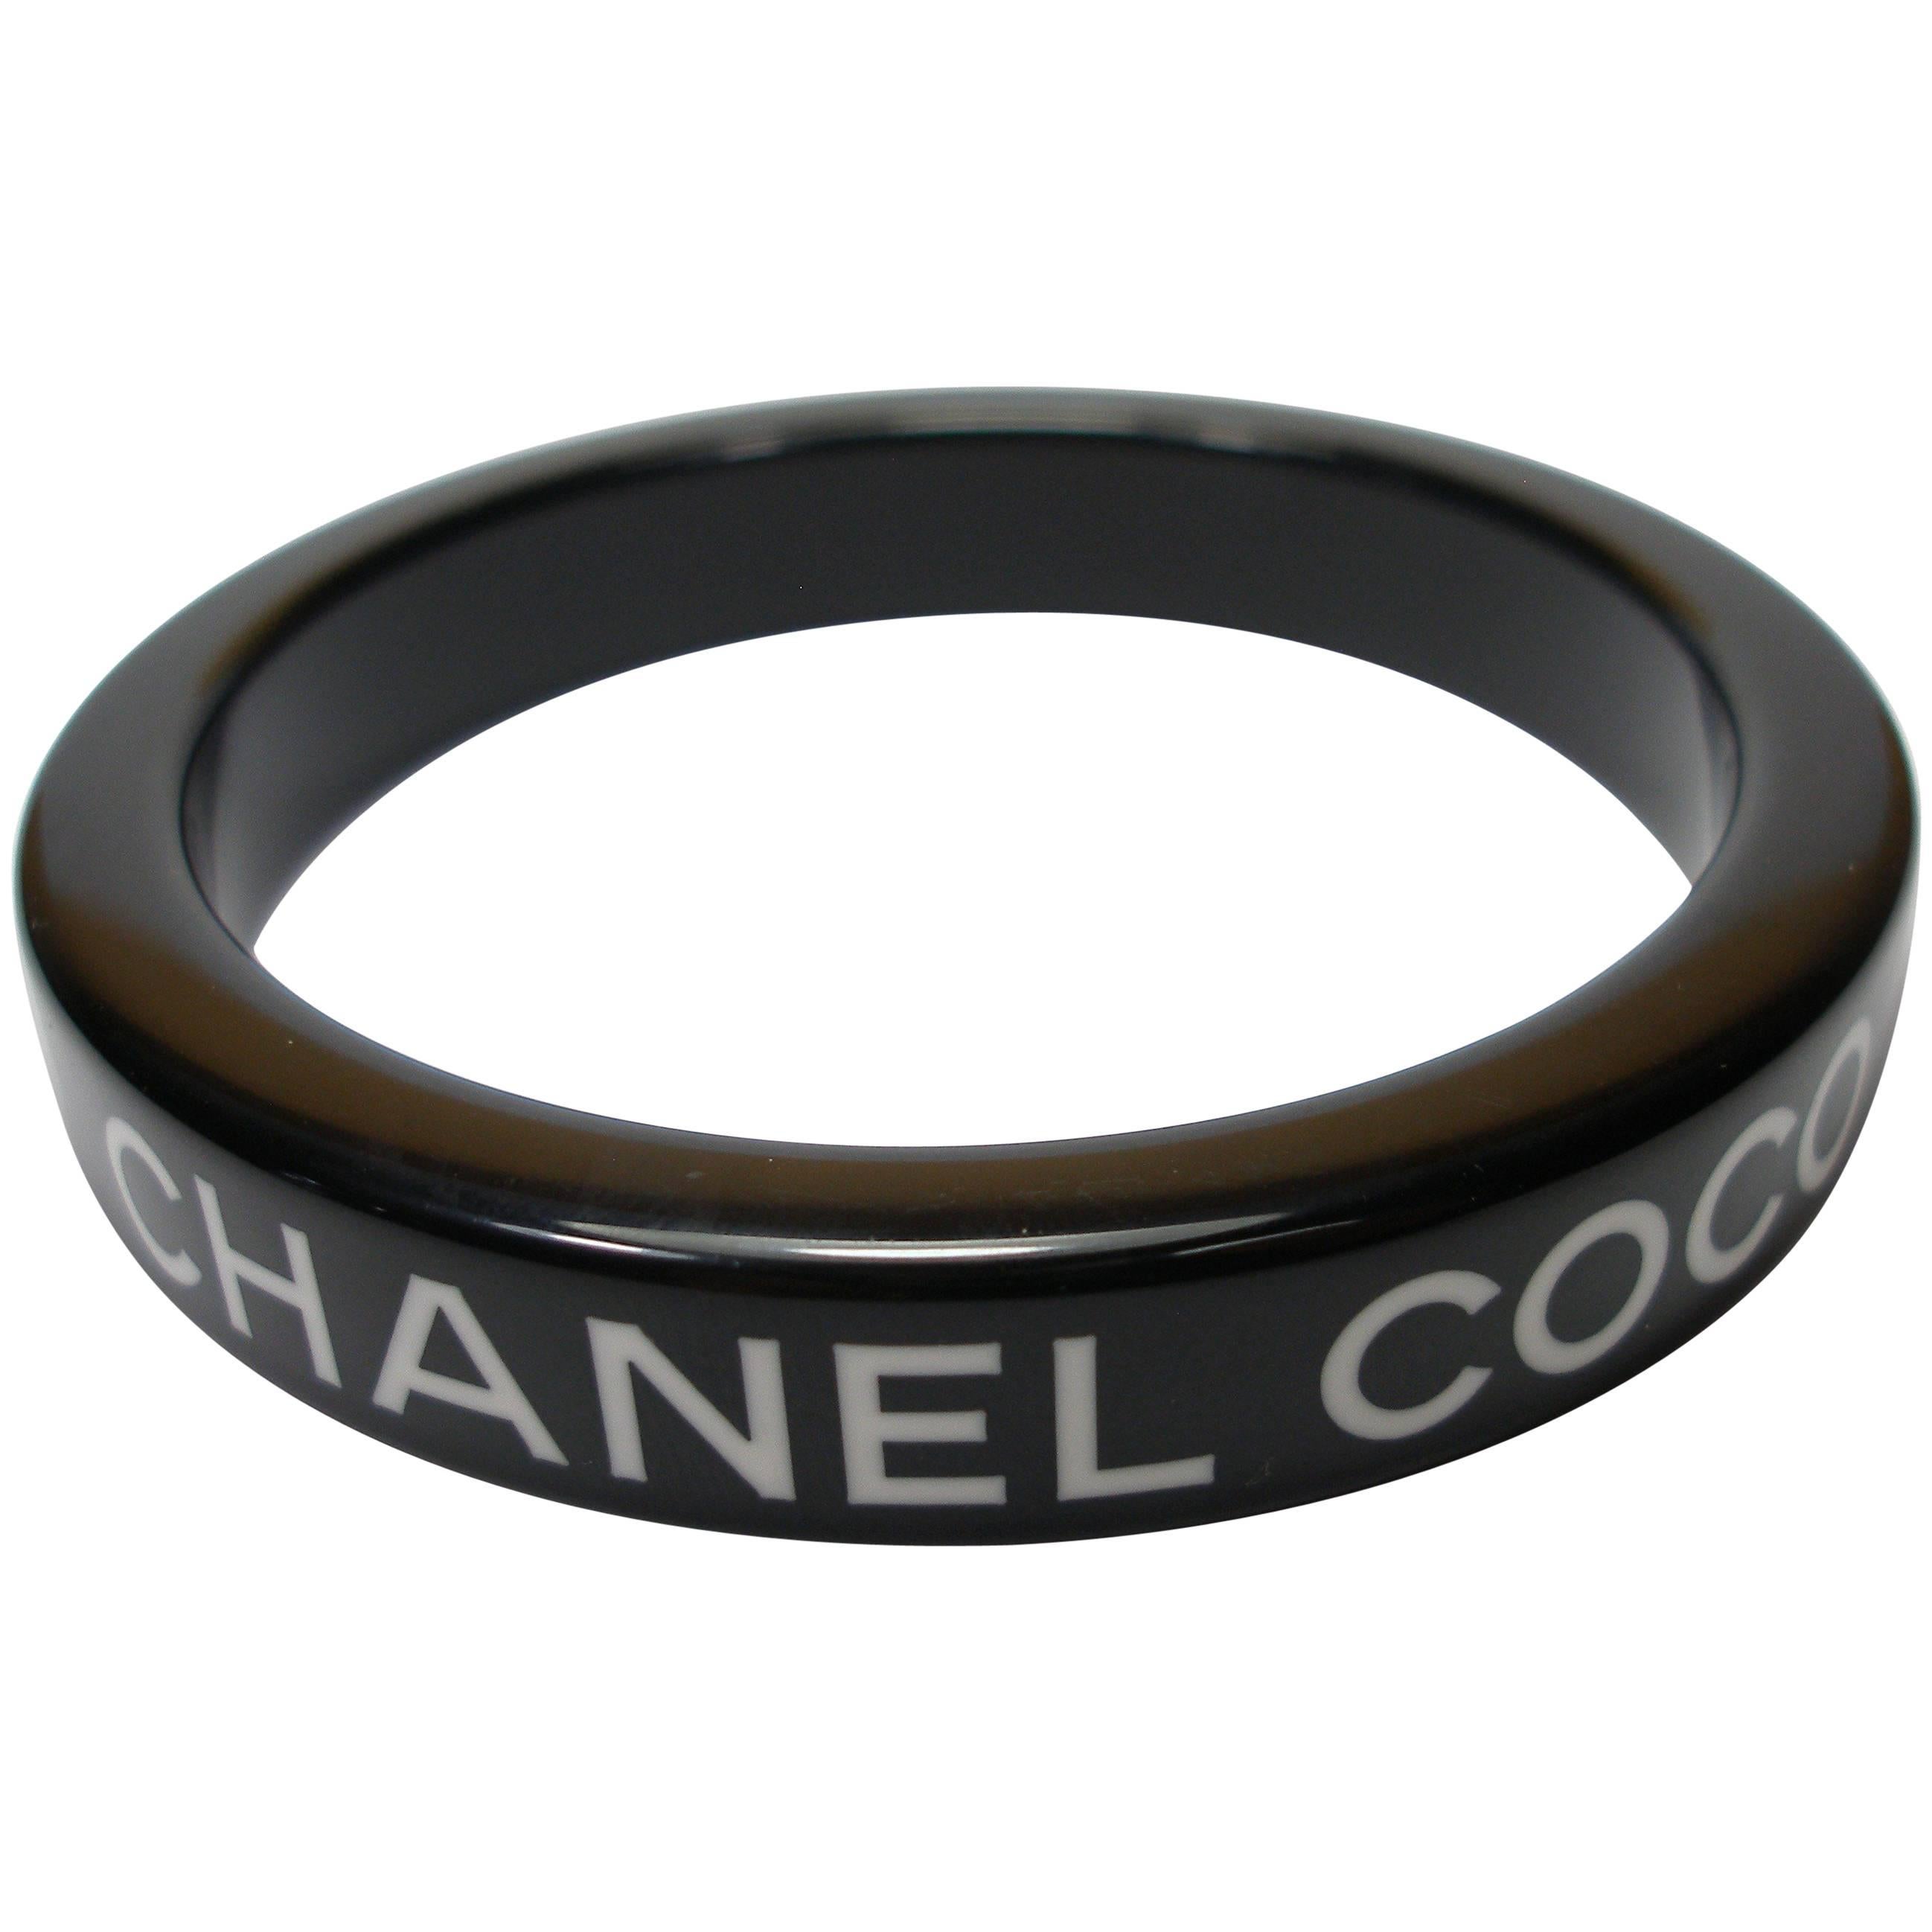 Vintage Chanel Coco Chanel Bracelet Bangle Diameter 6.5 cm 